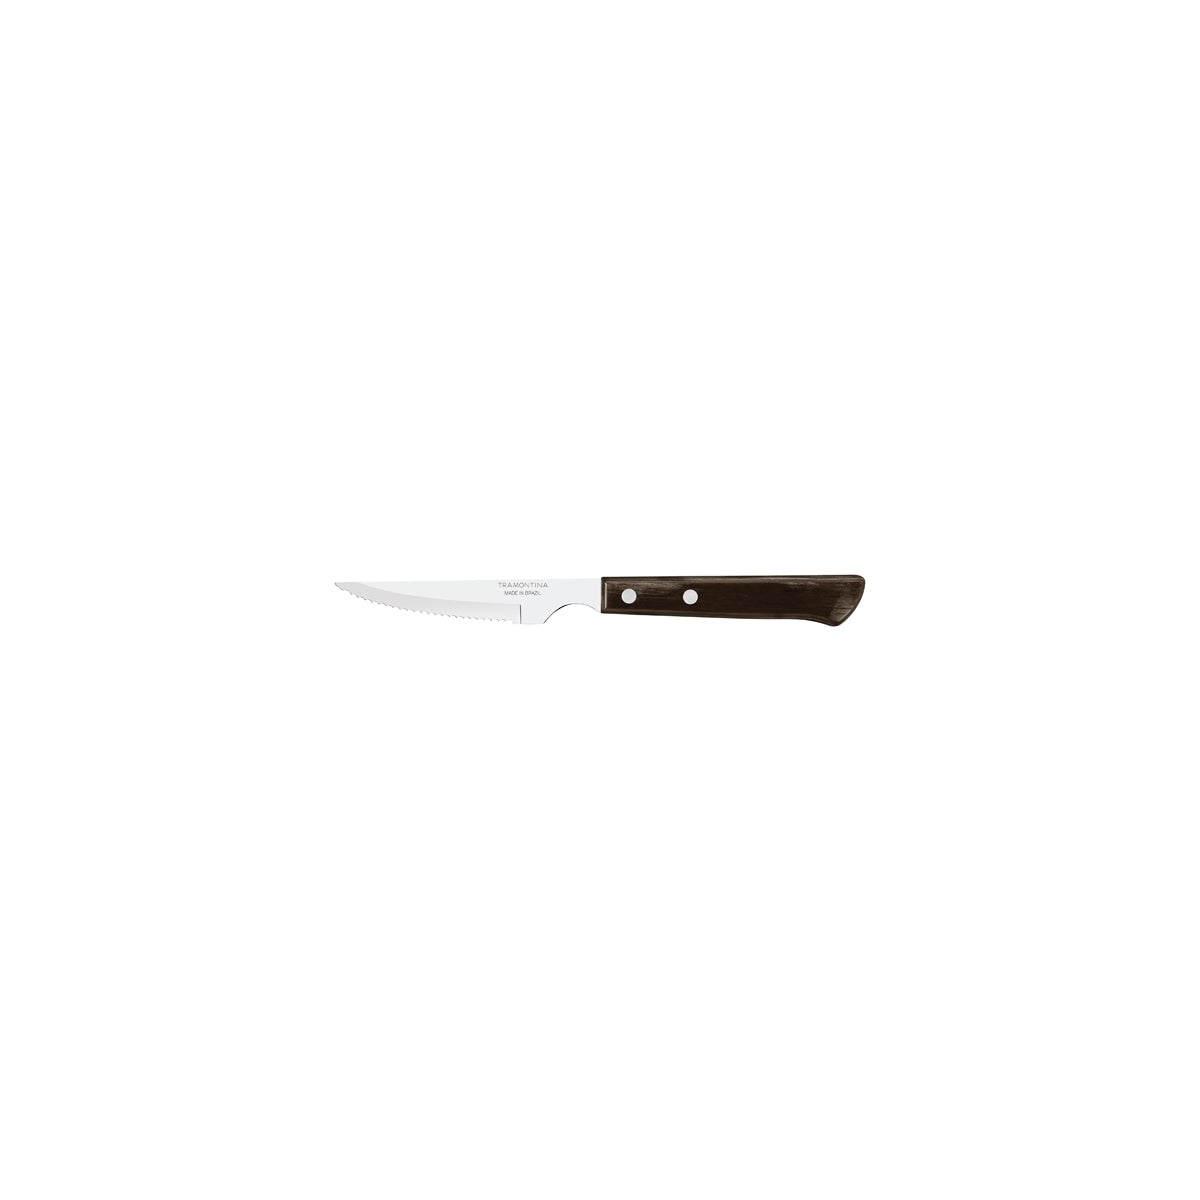 TM21109/094 Tramontina Churrasco Steak Knife Serrated Narrow Blade with Polywood Handle Brown 102mm Tomkin Australia Hospitality Supplies